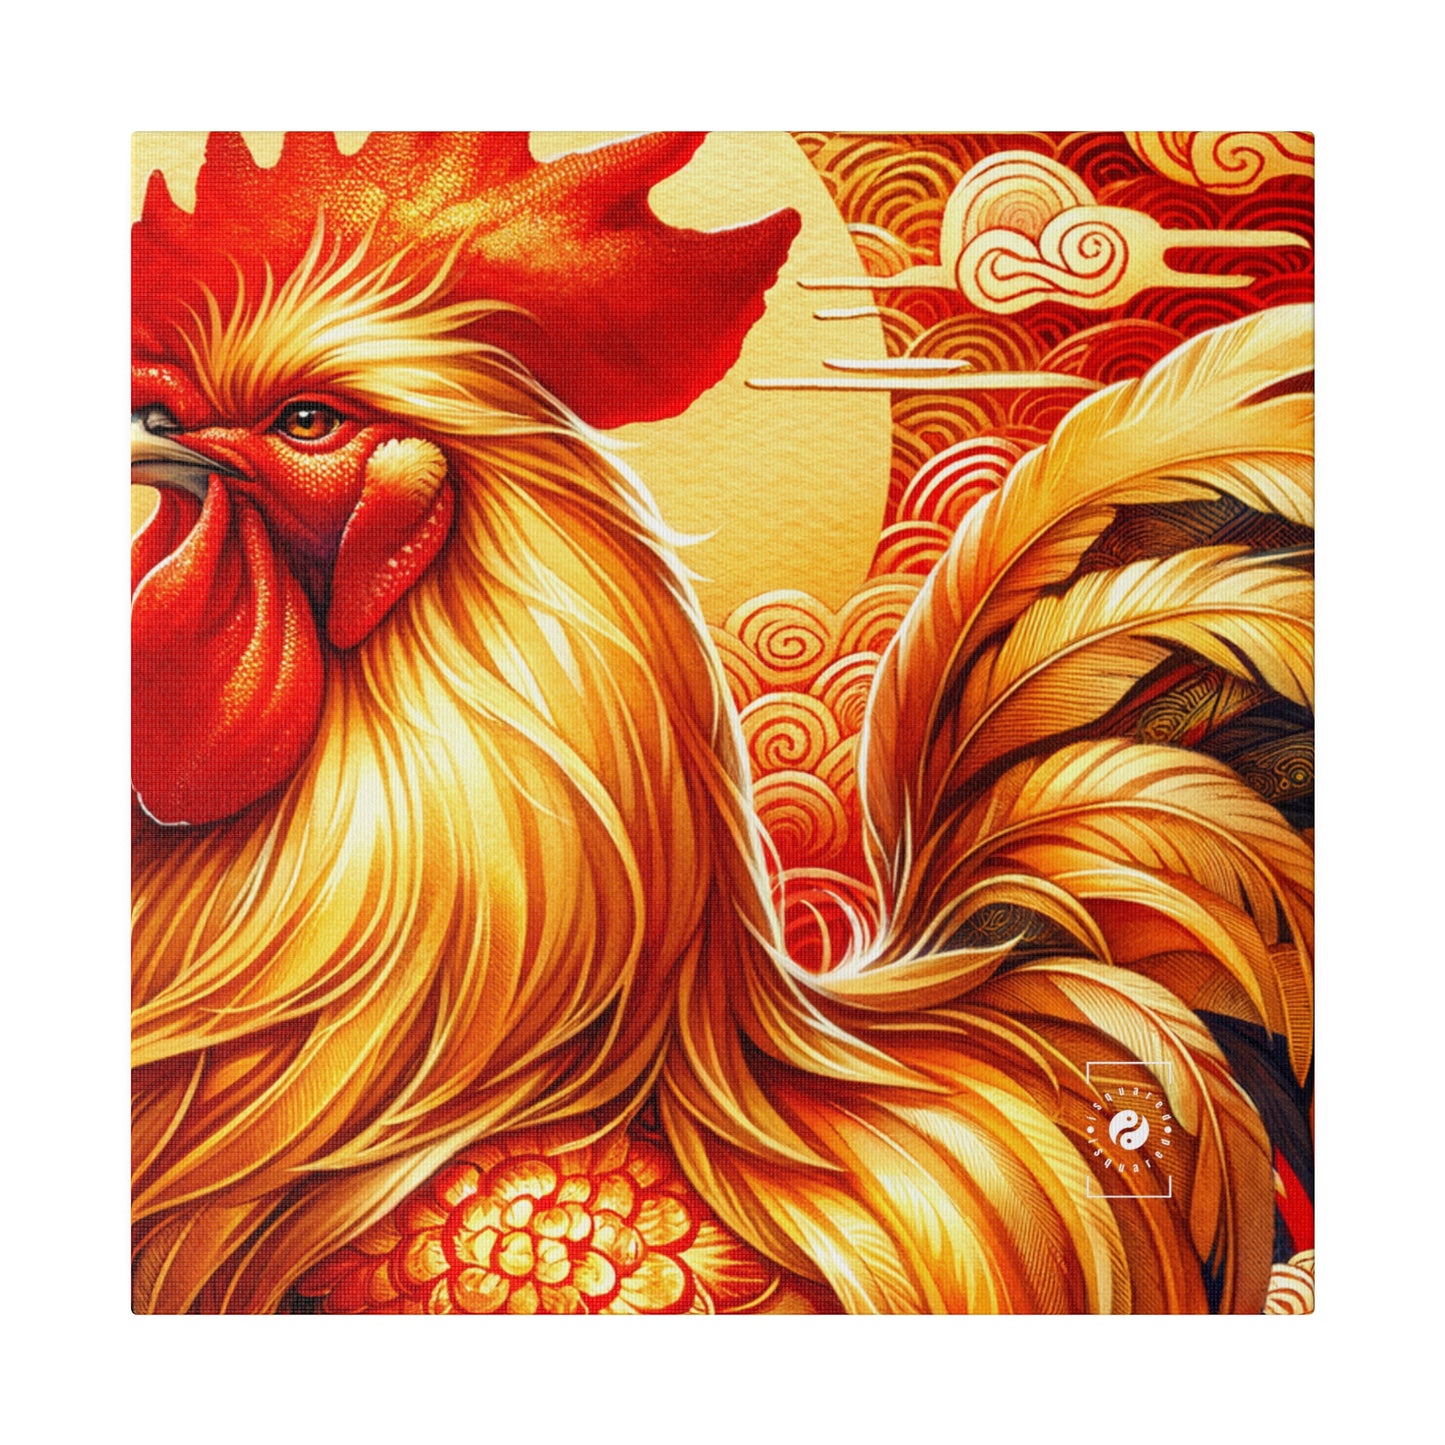 "Crimson Dawn: The Golden Rooster's Rebirth" - Art Print Canvas